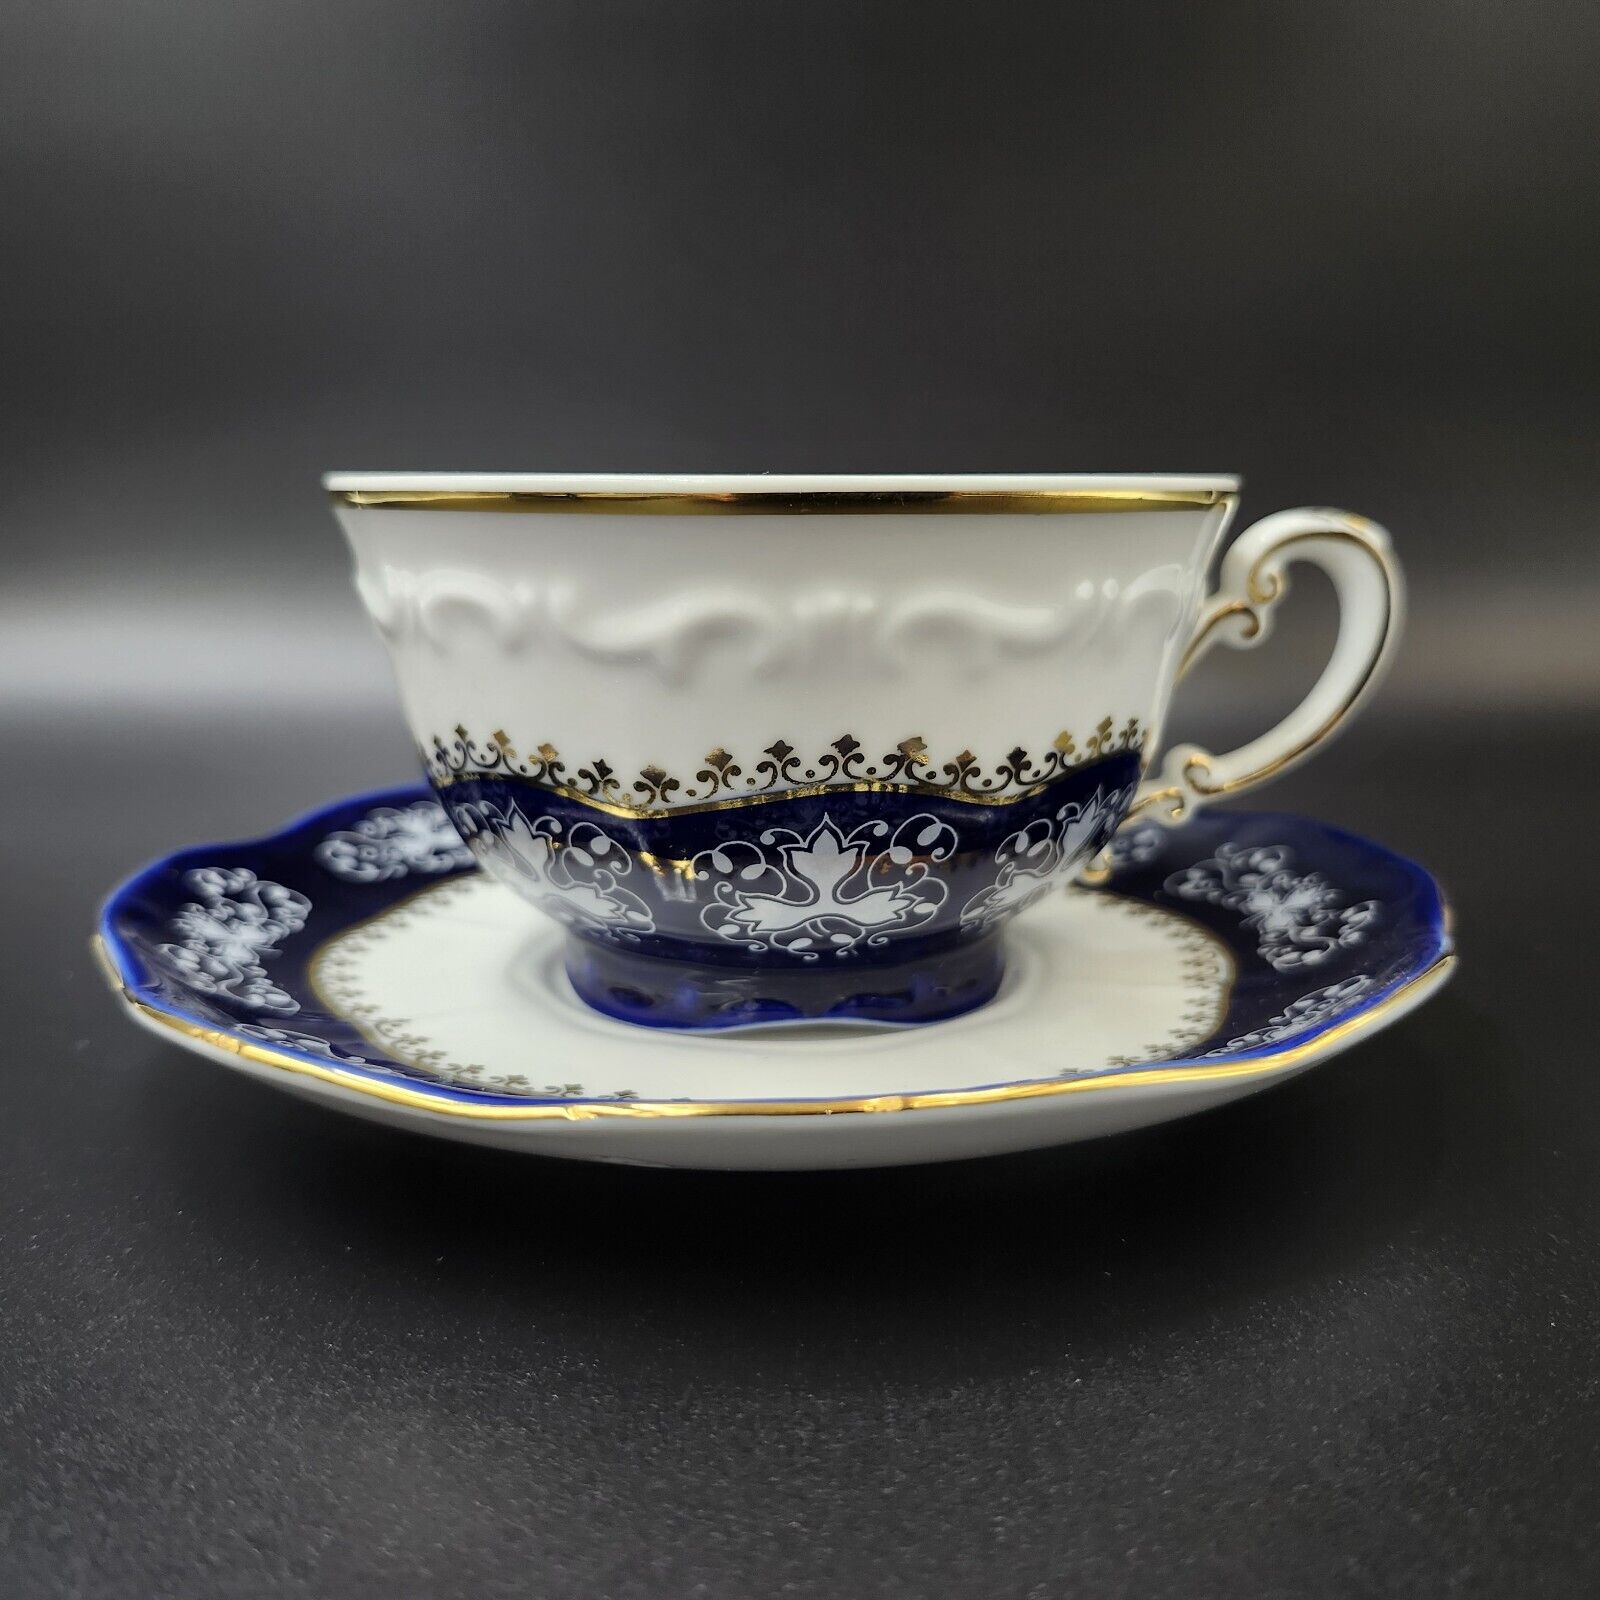 Zsolnay Pecs Hungary Porcelain Teacups Cobalt Blue, White & Gold Tri Leaf Floral